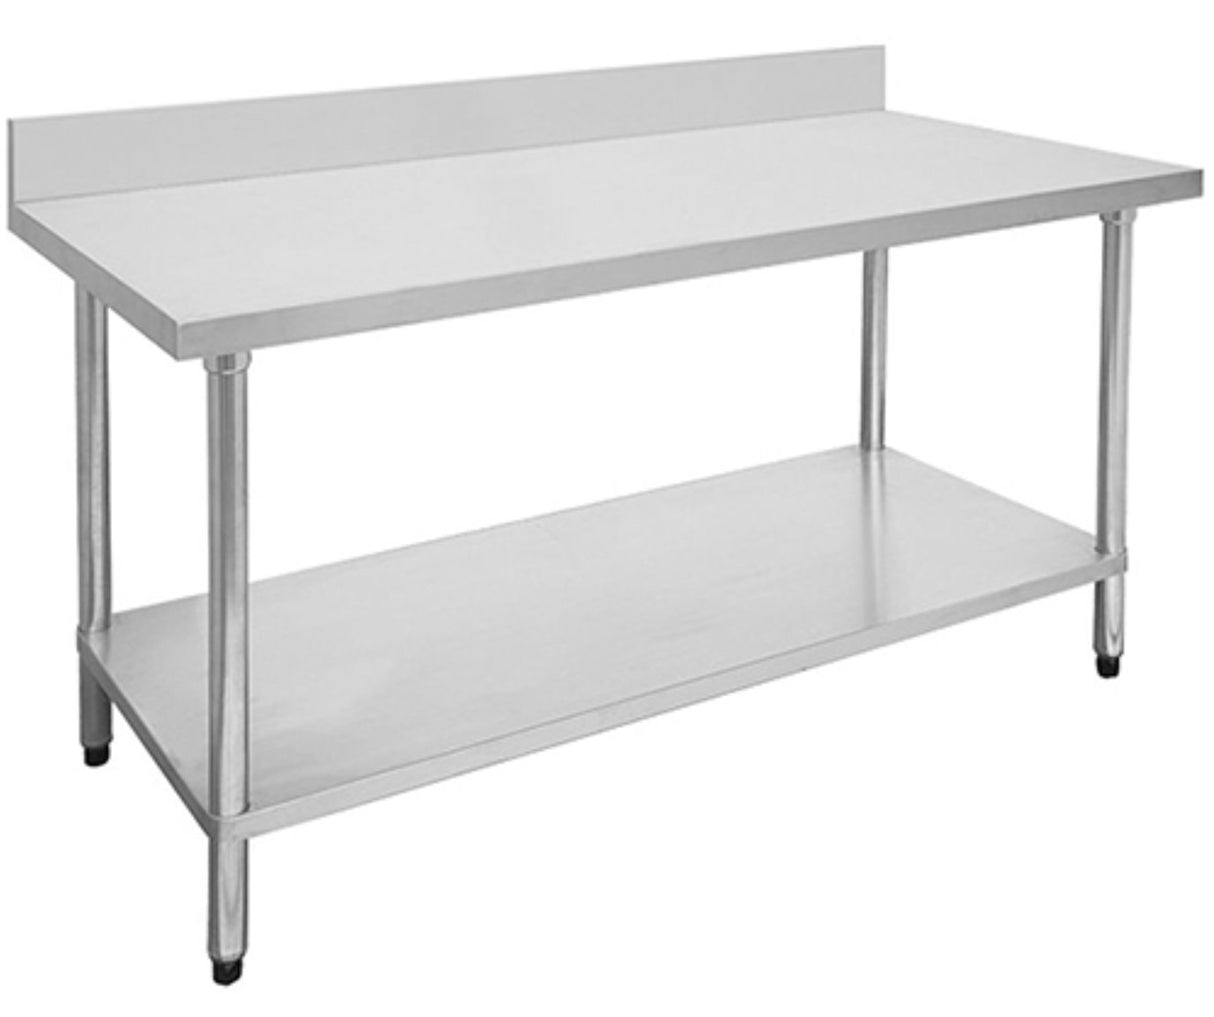 Economic 304 Grade Stainless Steel Tables with Splashback 700 Deep – SSTable7SB-EC - Cafe Supply